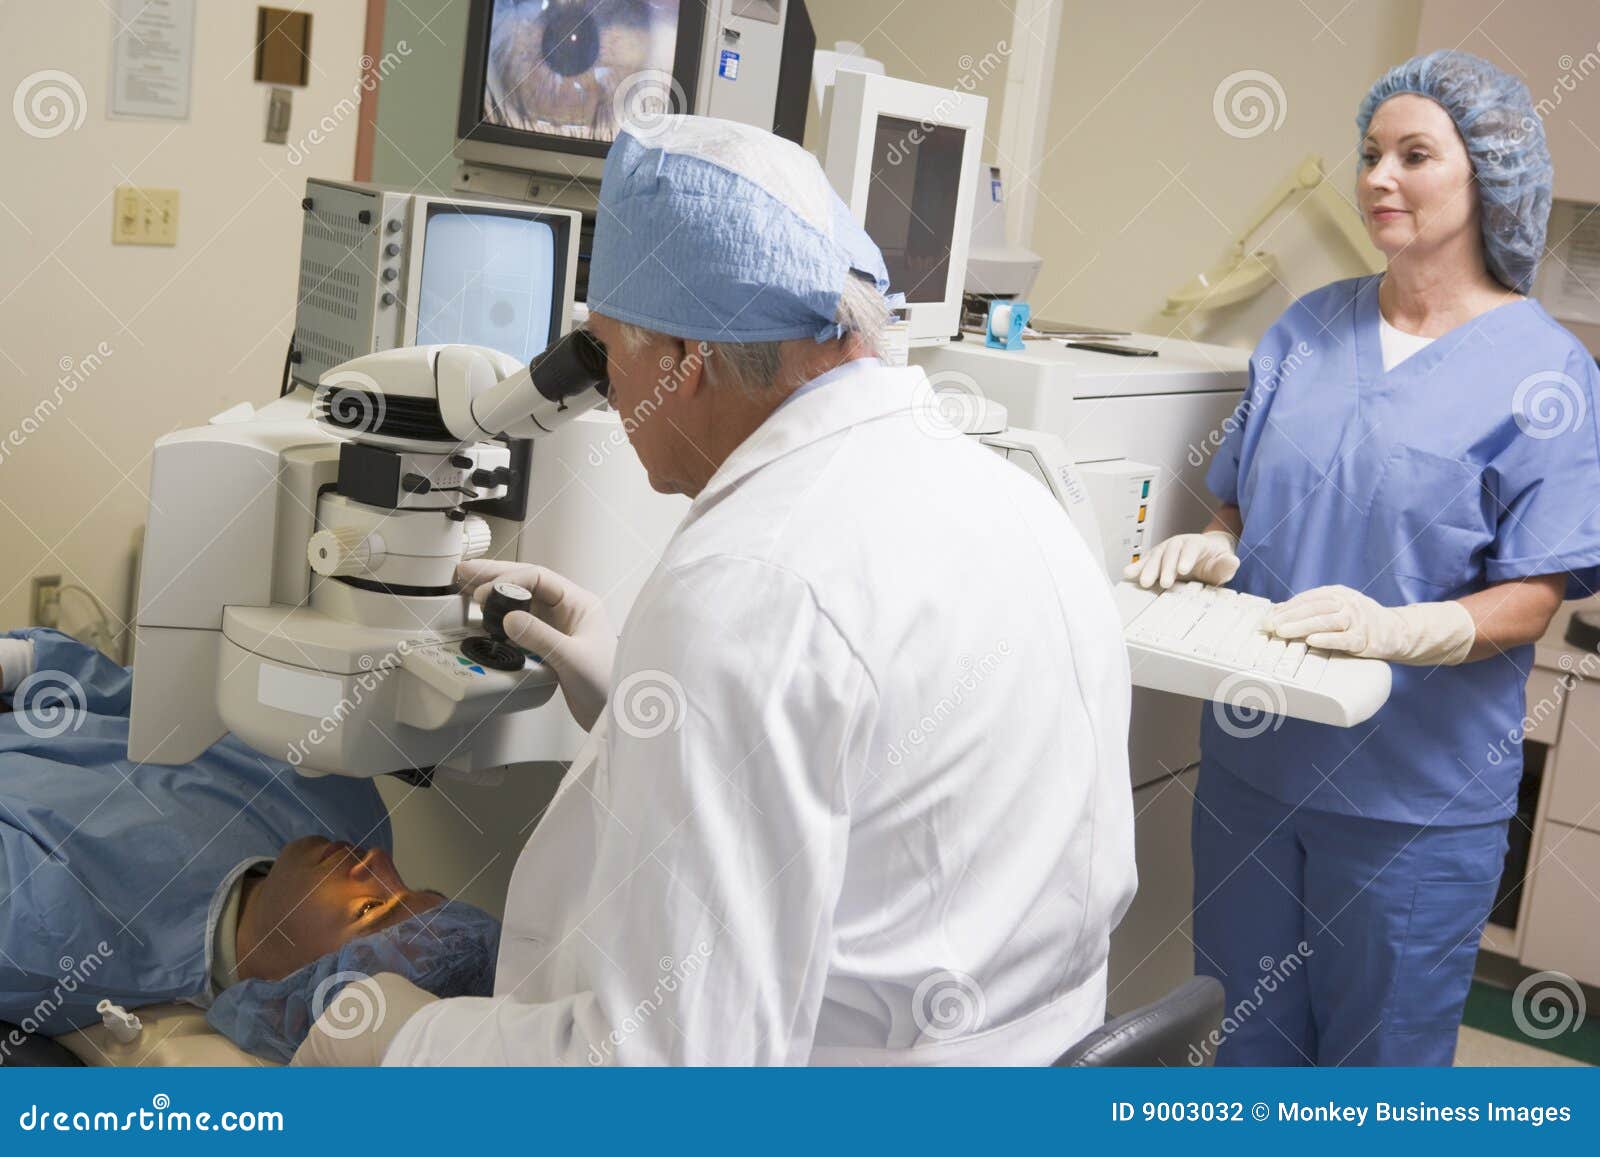 opthamologist performing laser eye treatment